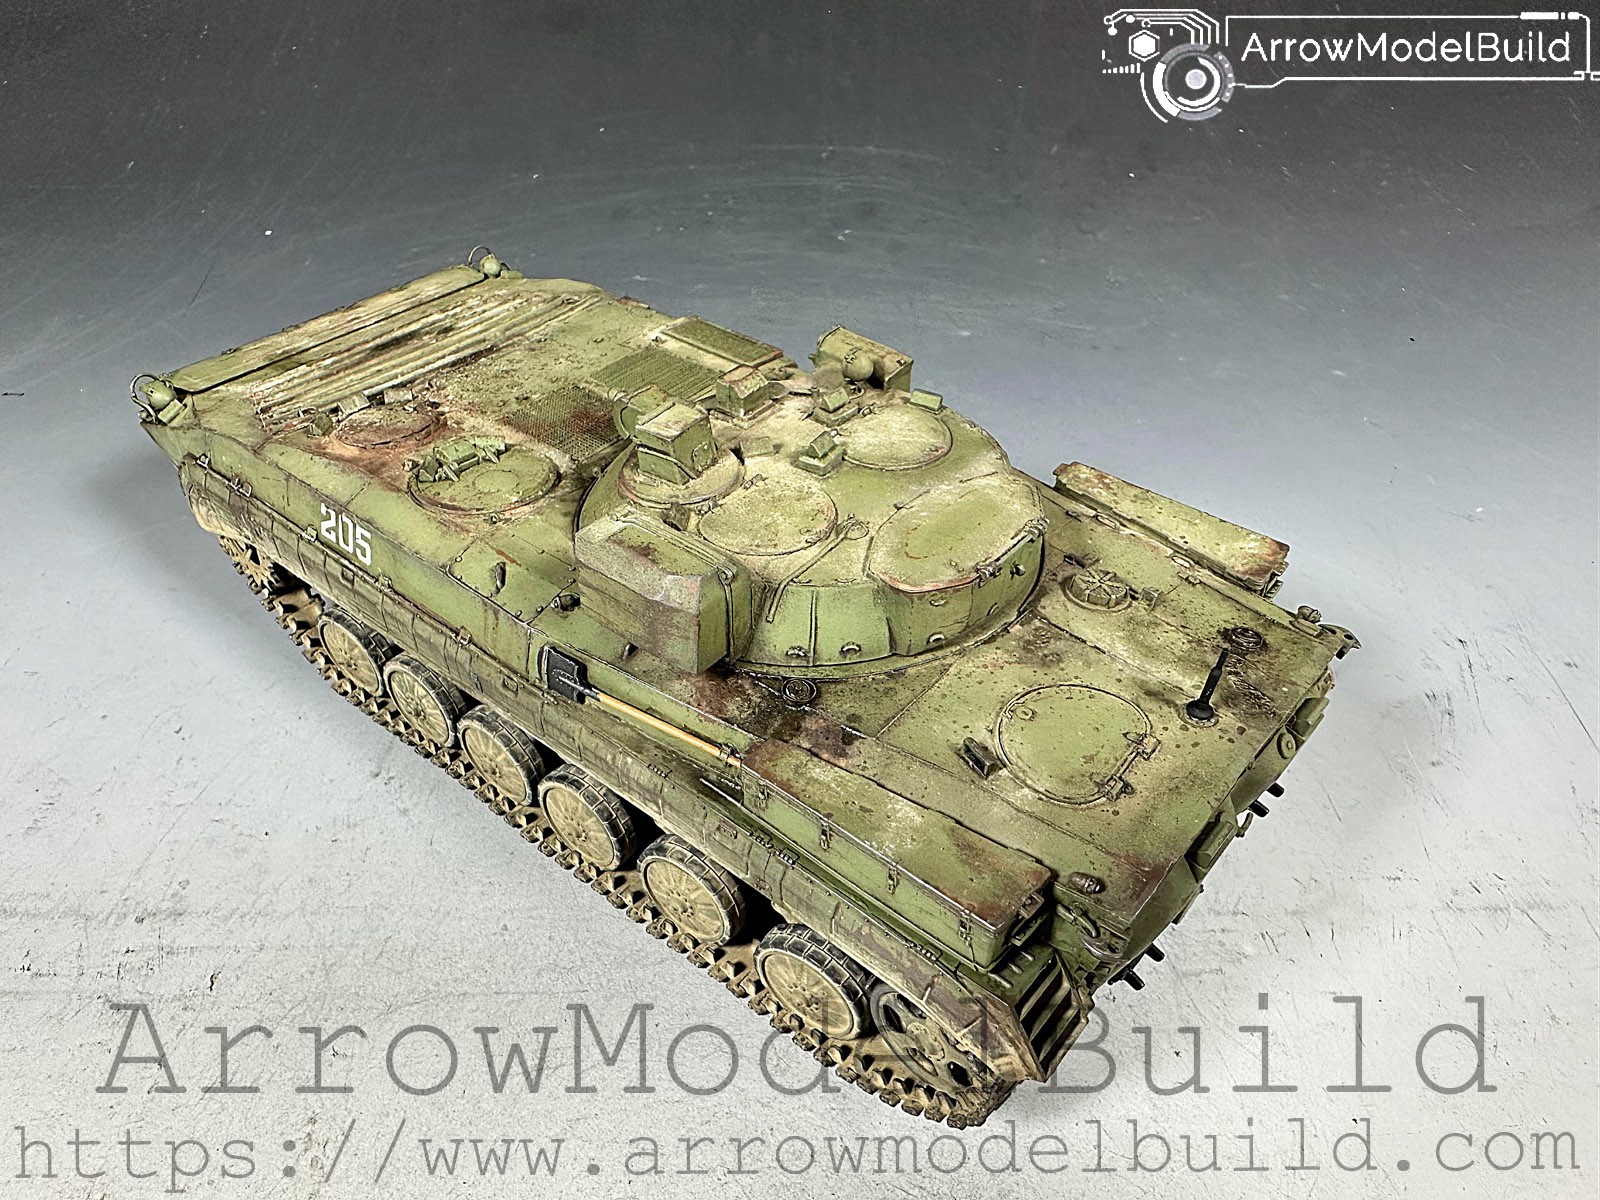 Picture of ArrowModelBuild PRP-4 "Nard" (1V121) Military Tank Built & Painted 1/35 Model Kit